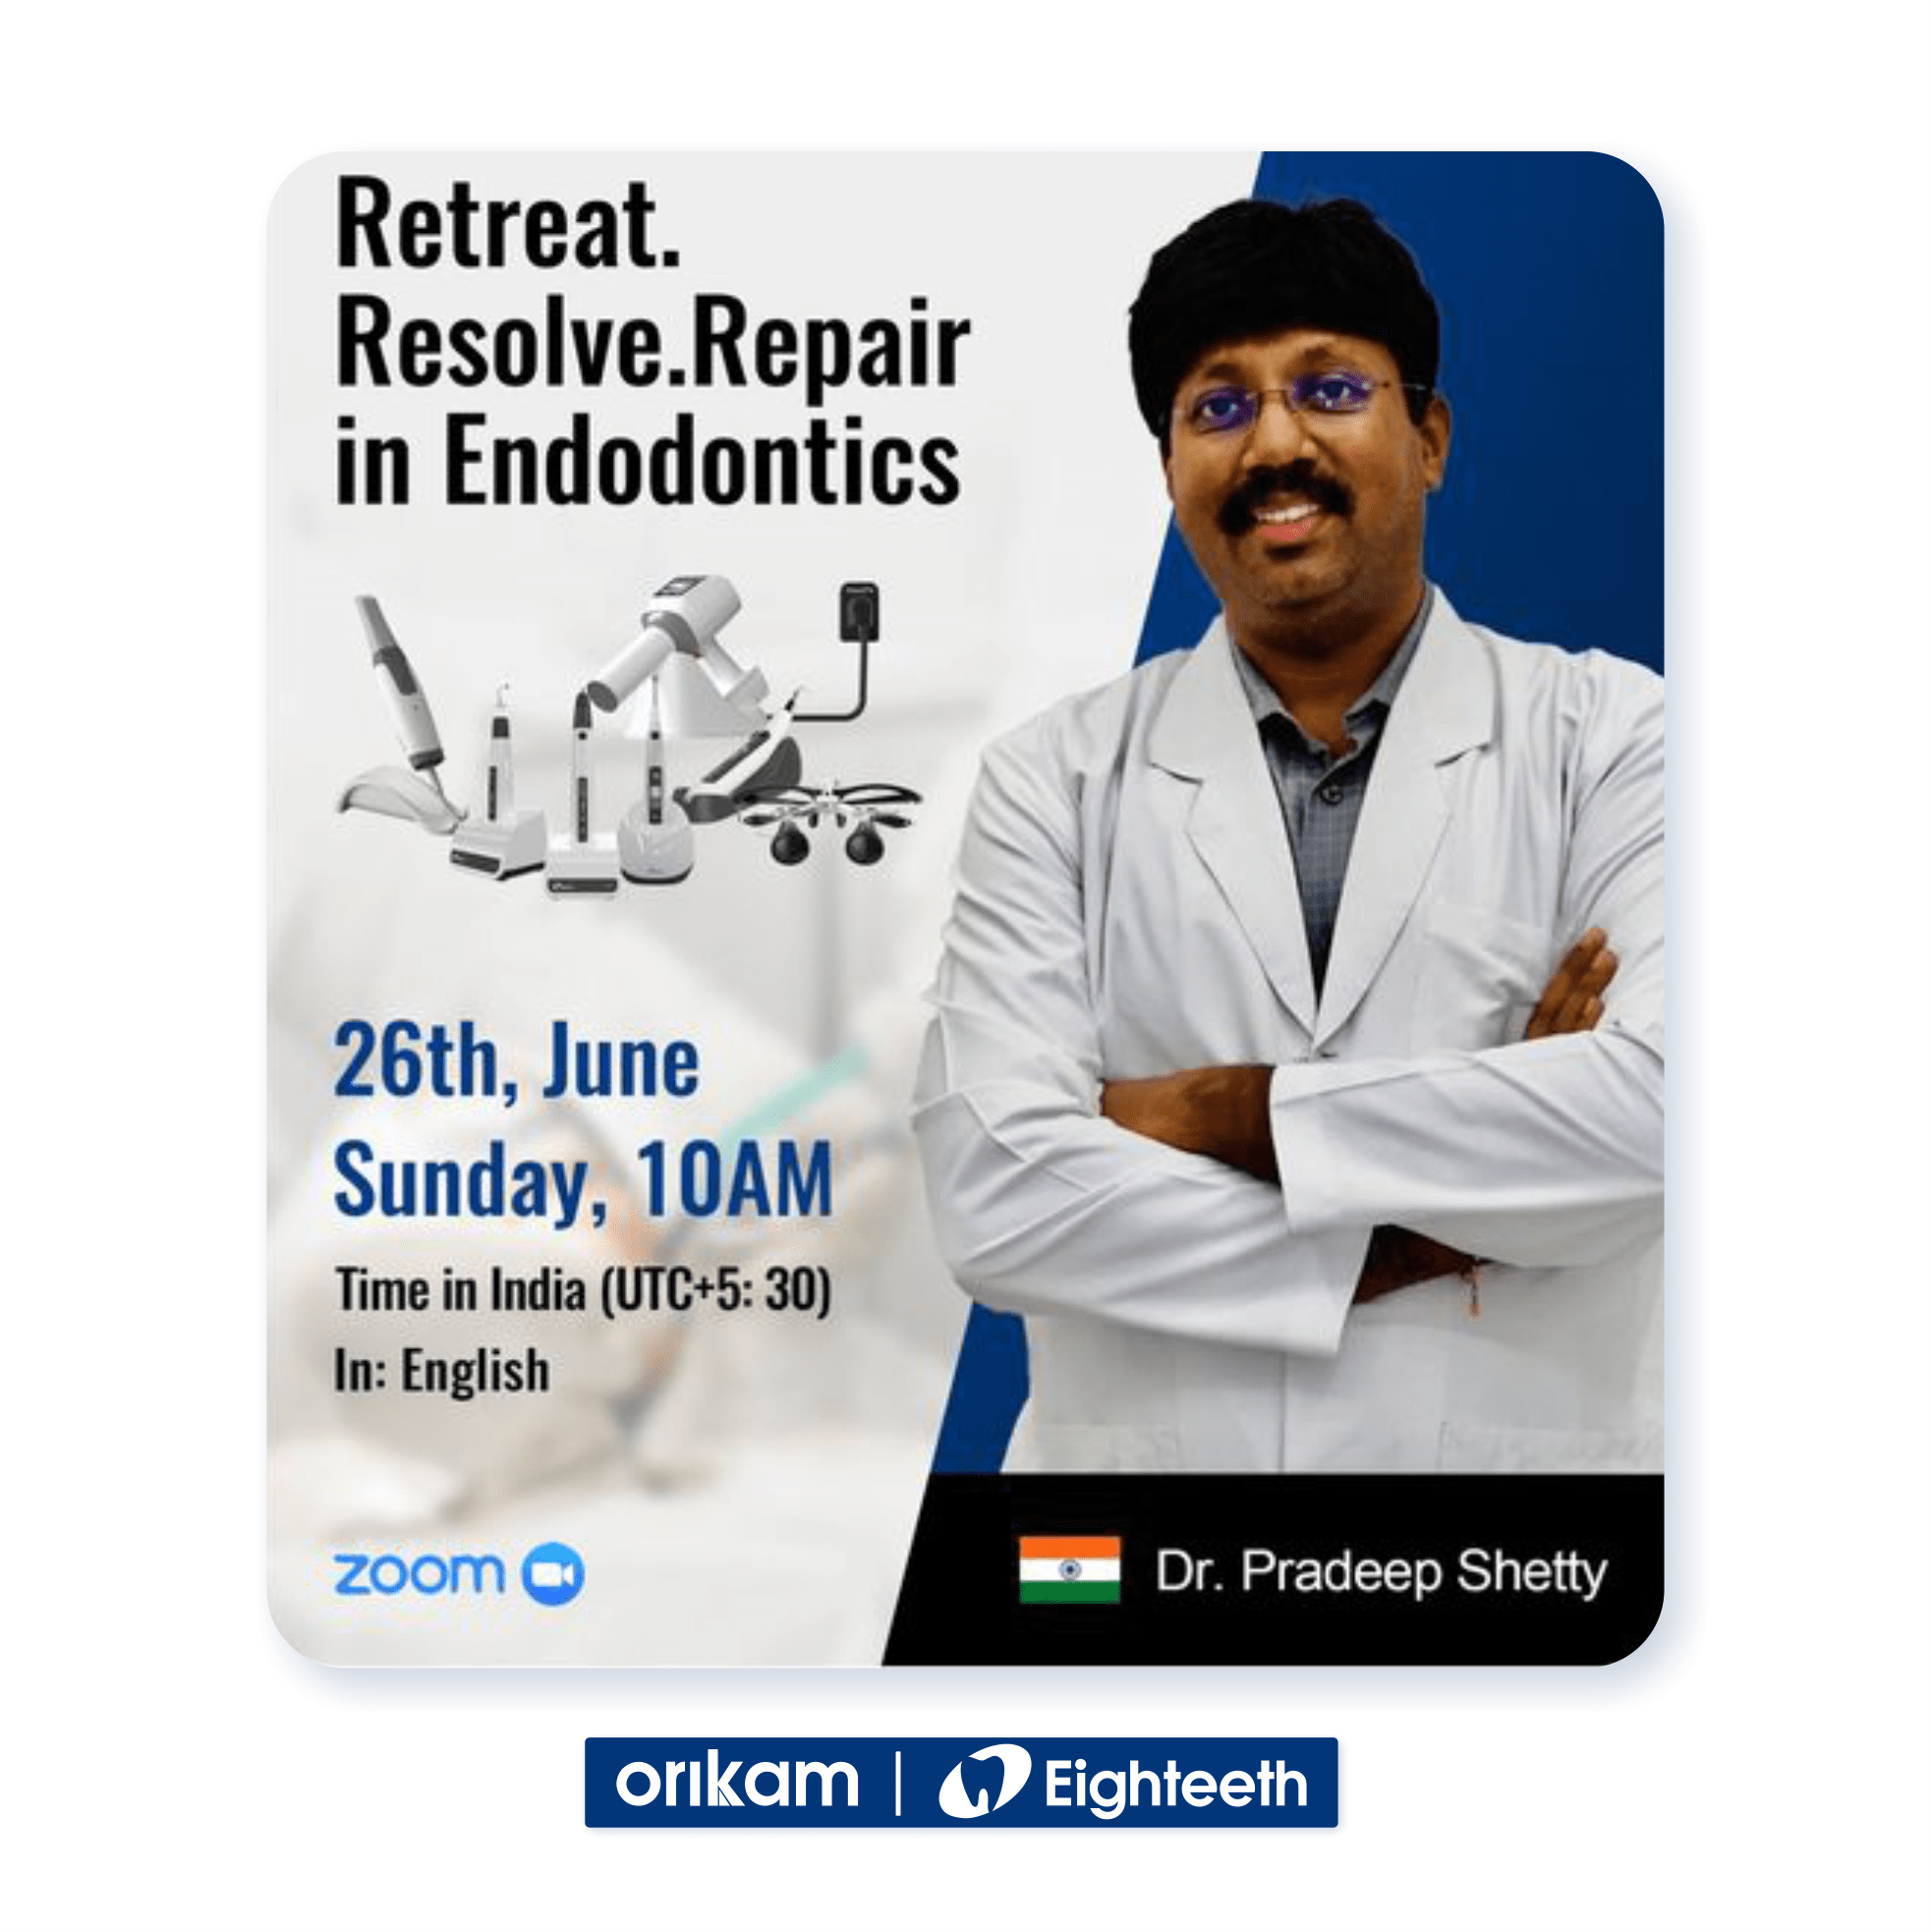 Retreat. Resolve. Repair in Endodontics by Dr. Pradeep Shetty